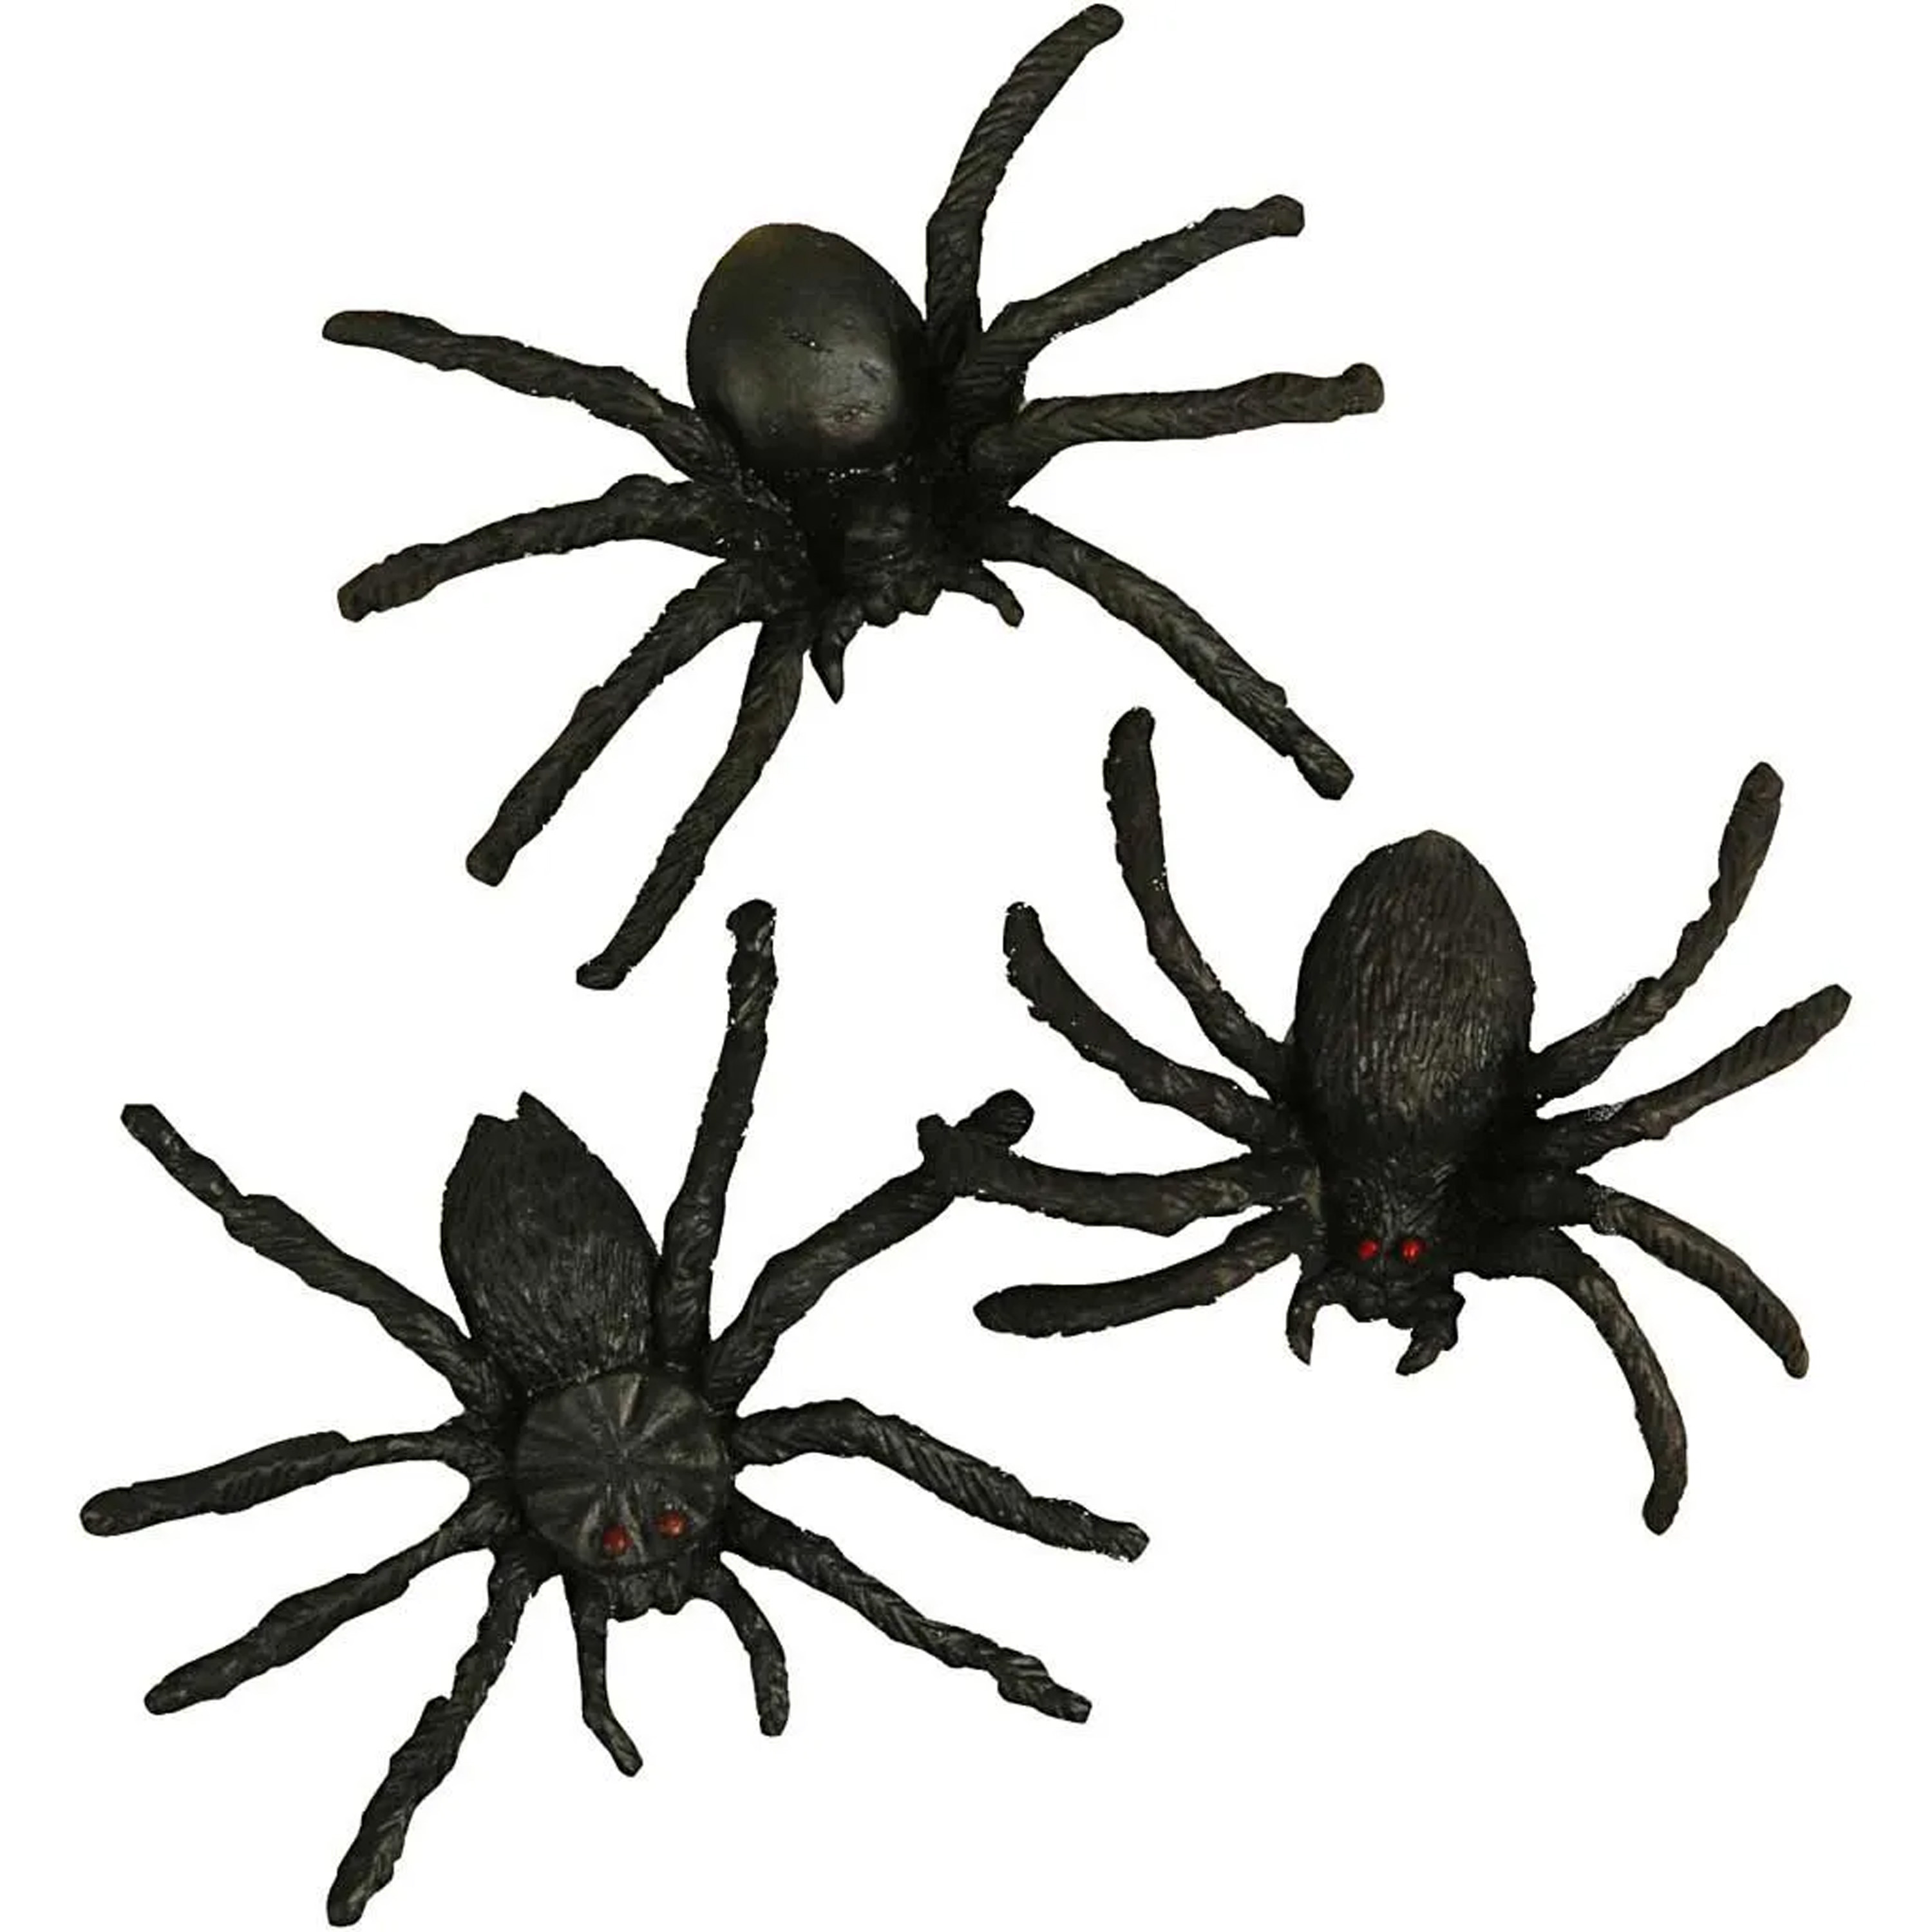 Nep spinnen/spinnetjes 4 cm - zwart - 20x stuks - Horror/griezel thema decoratie beestjes